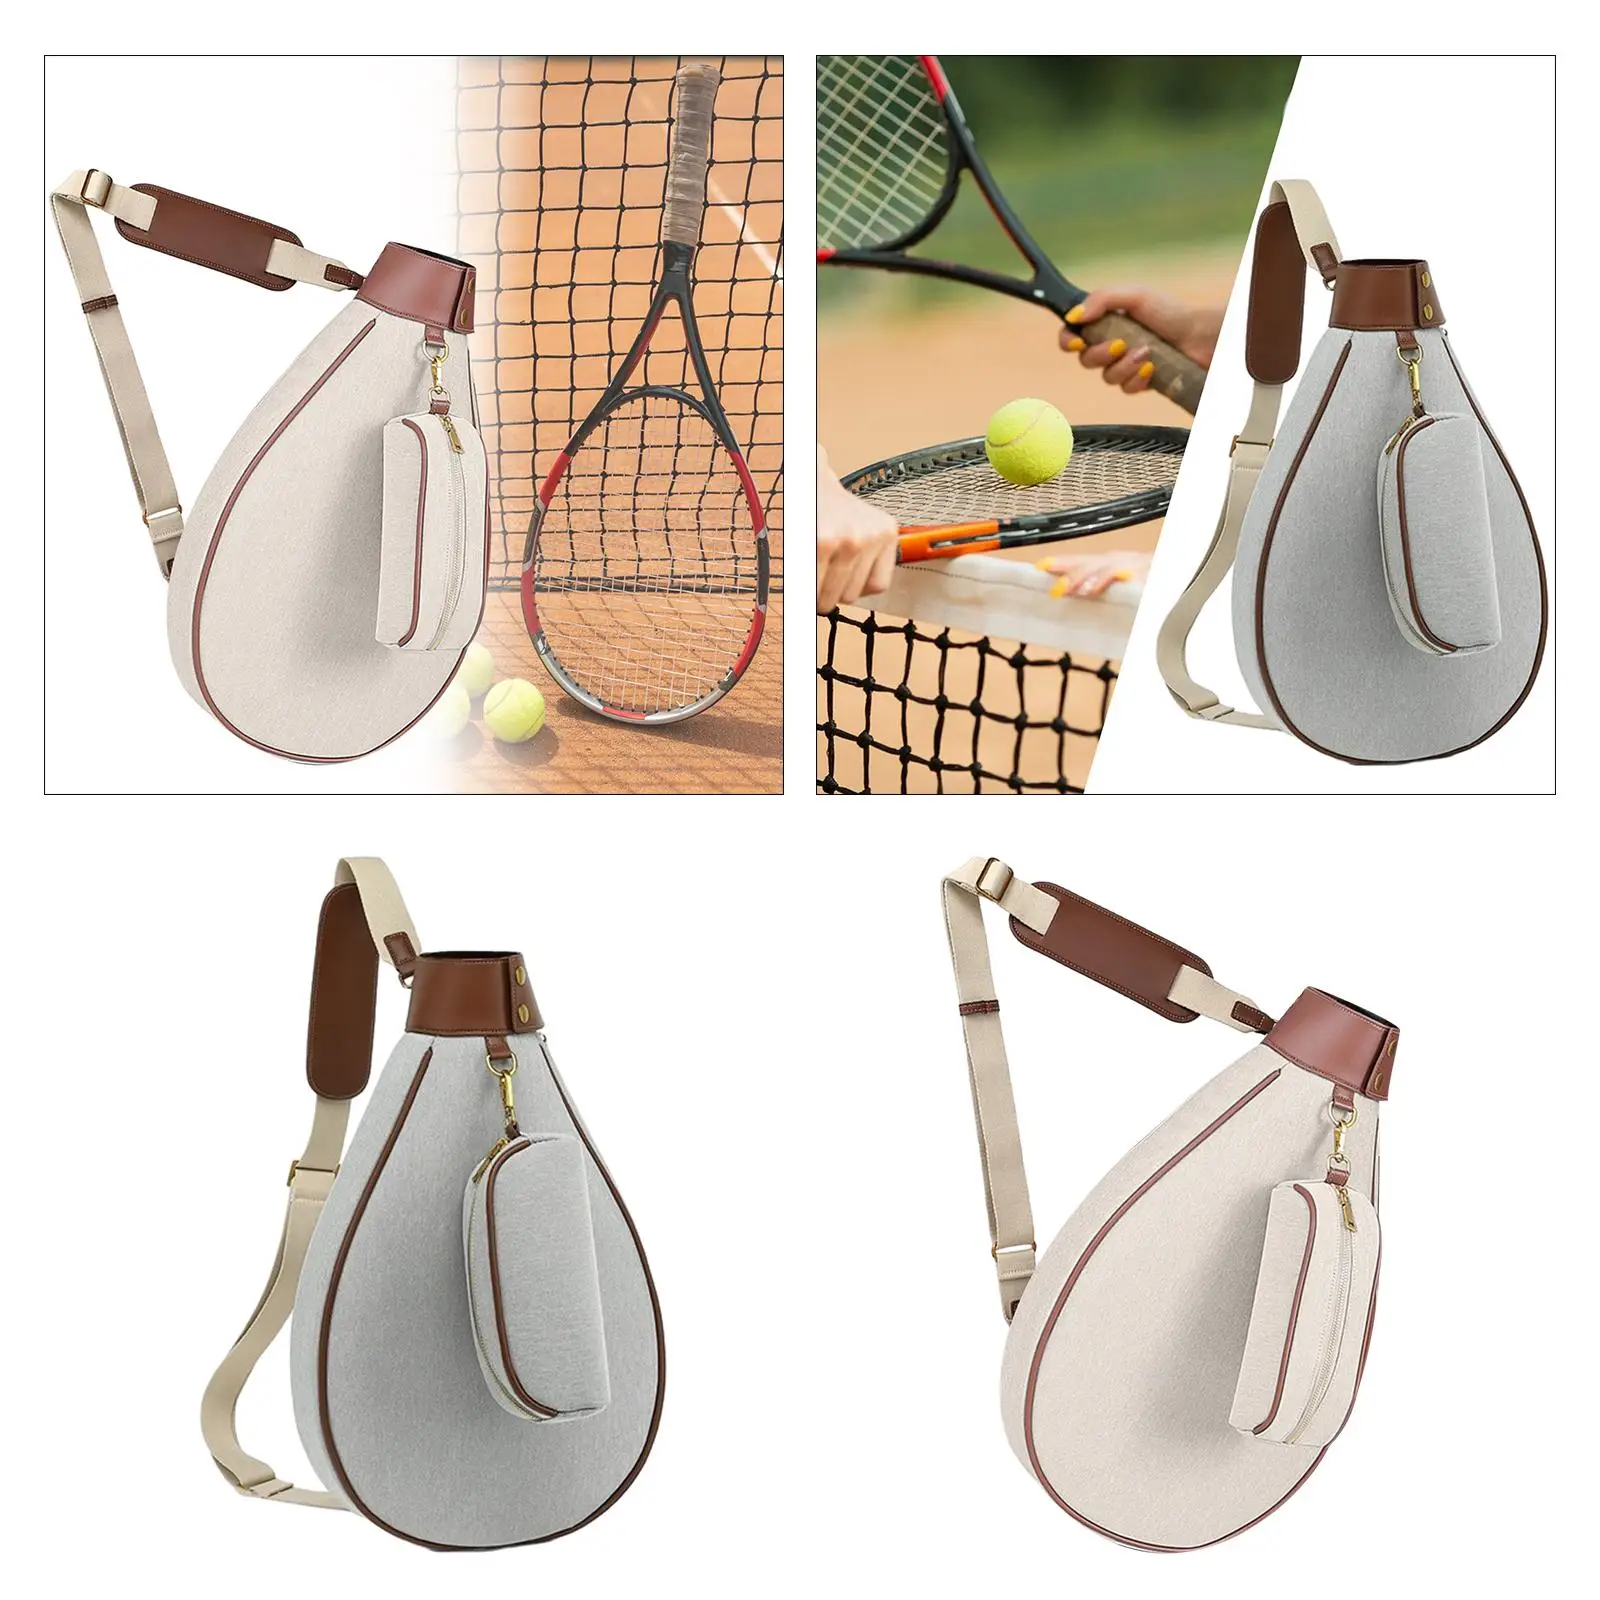 Tennis Bag Durable Shoulder Bag Carrier Versatile Badminton Racquet Bag for Tennis Racket, Pickleball Paddles, Badminton Racquet